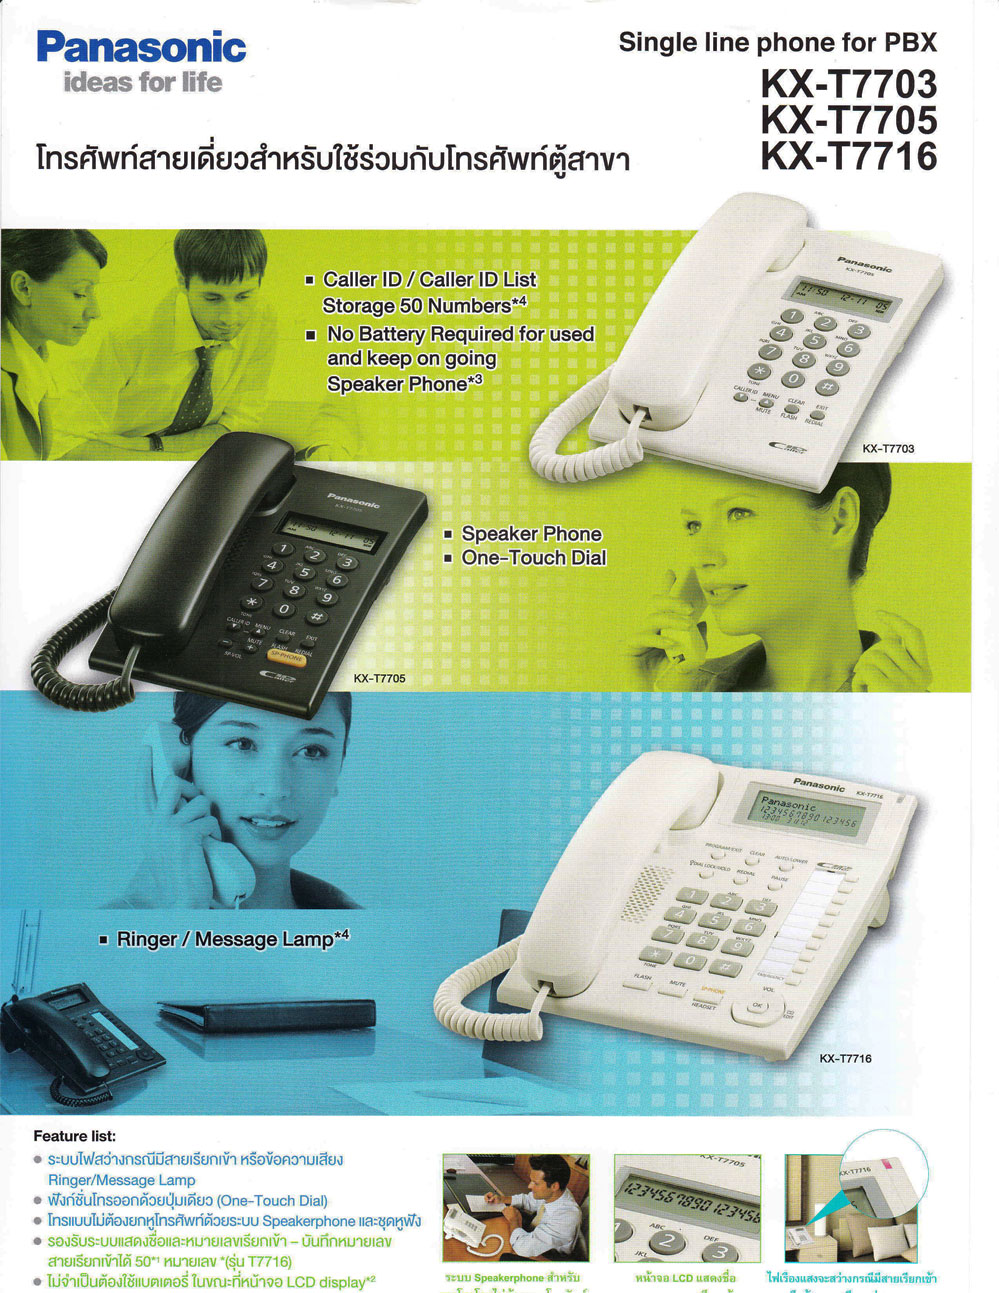 KX-T7716,โทรศัพท์สายเดี่ยว,Singleline,Telephone,โทรศัพท์ตั้งโต๊ะ,ใช้กับ,ตู้สาขาโทรศัพท์,Panasonic